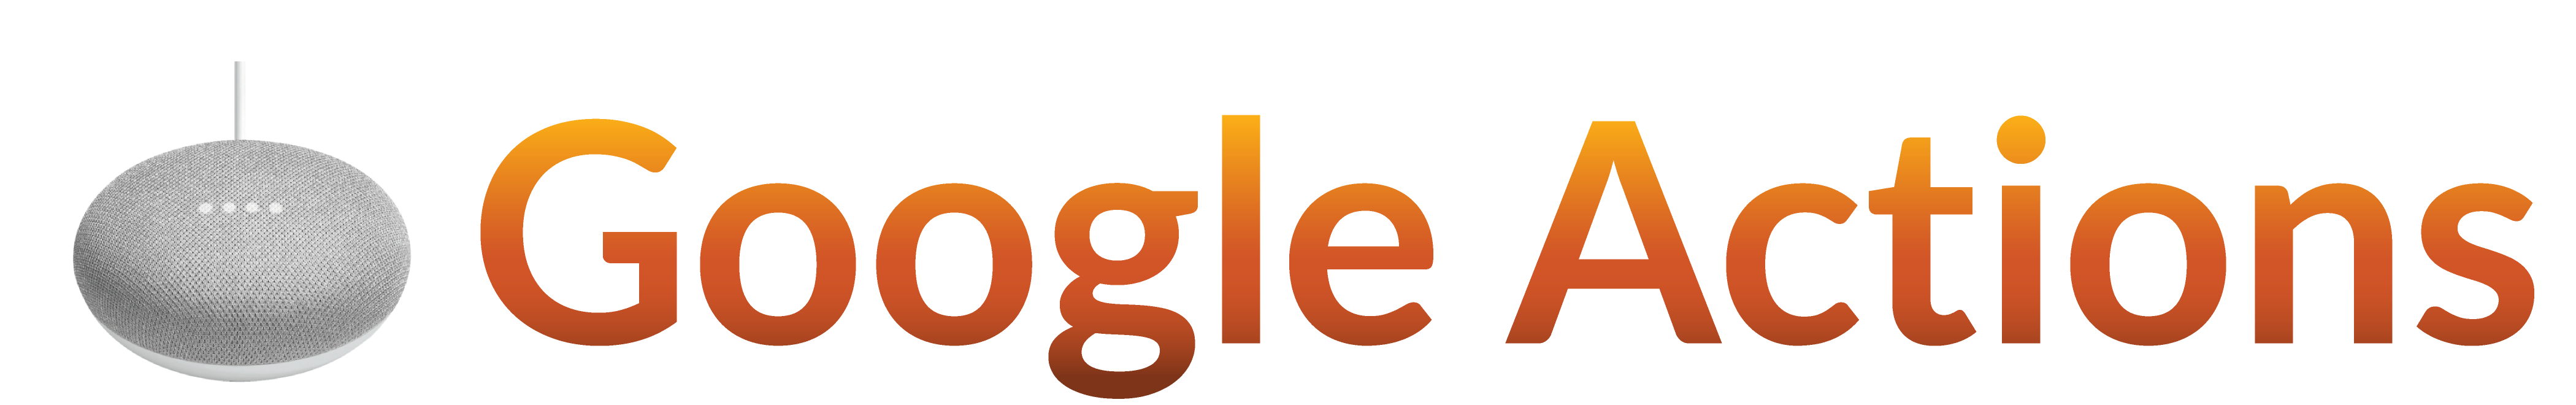 Google Action logo